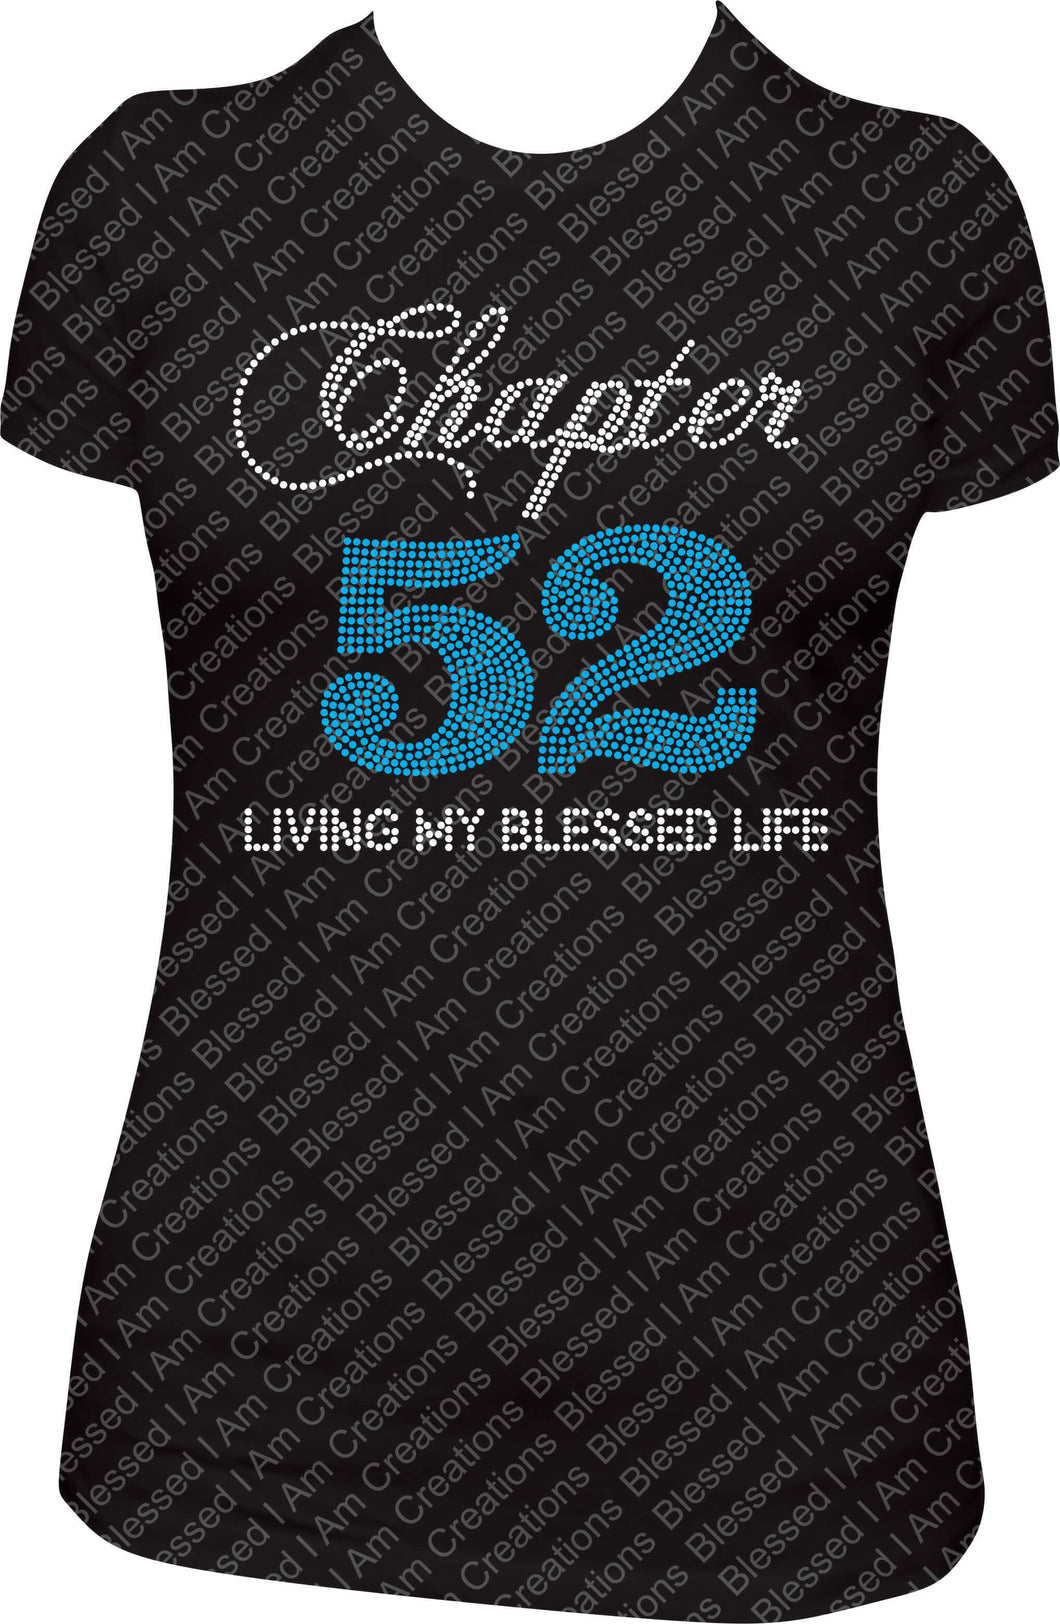 Birthday Girl Shirt, Chapter 52 Birthday Shirt, Bling Birthday Shirt, Rhinestone Birthday Shirt, Living My Blessed life shirt, 